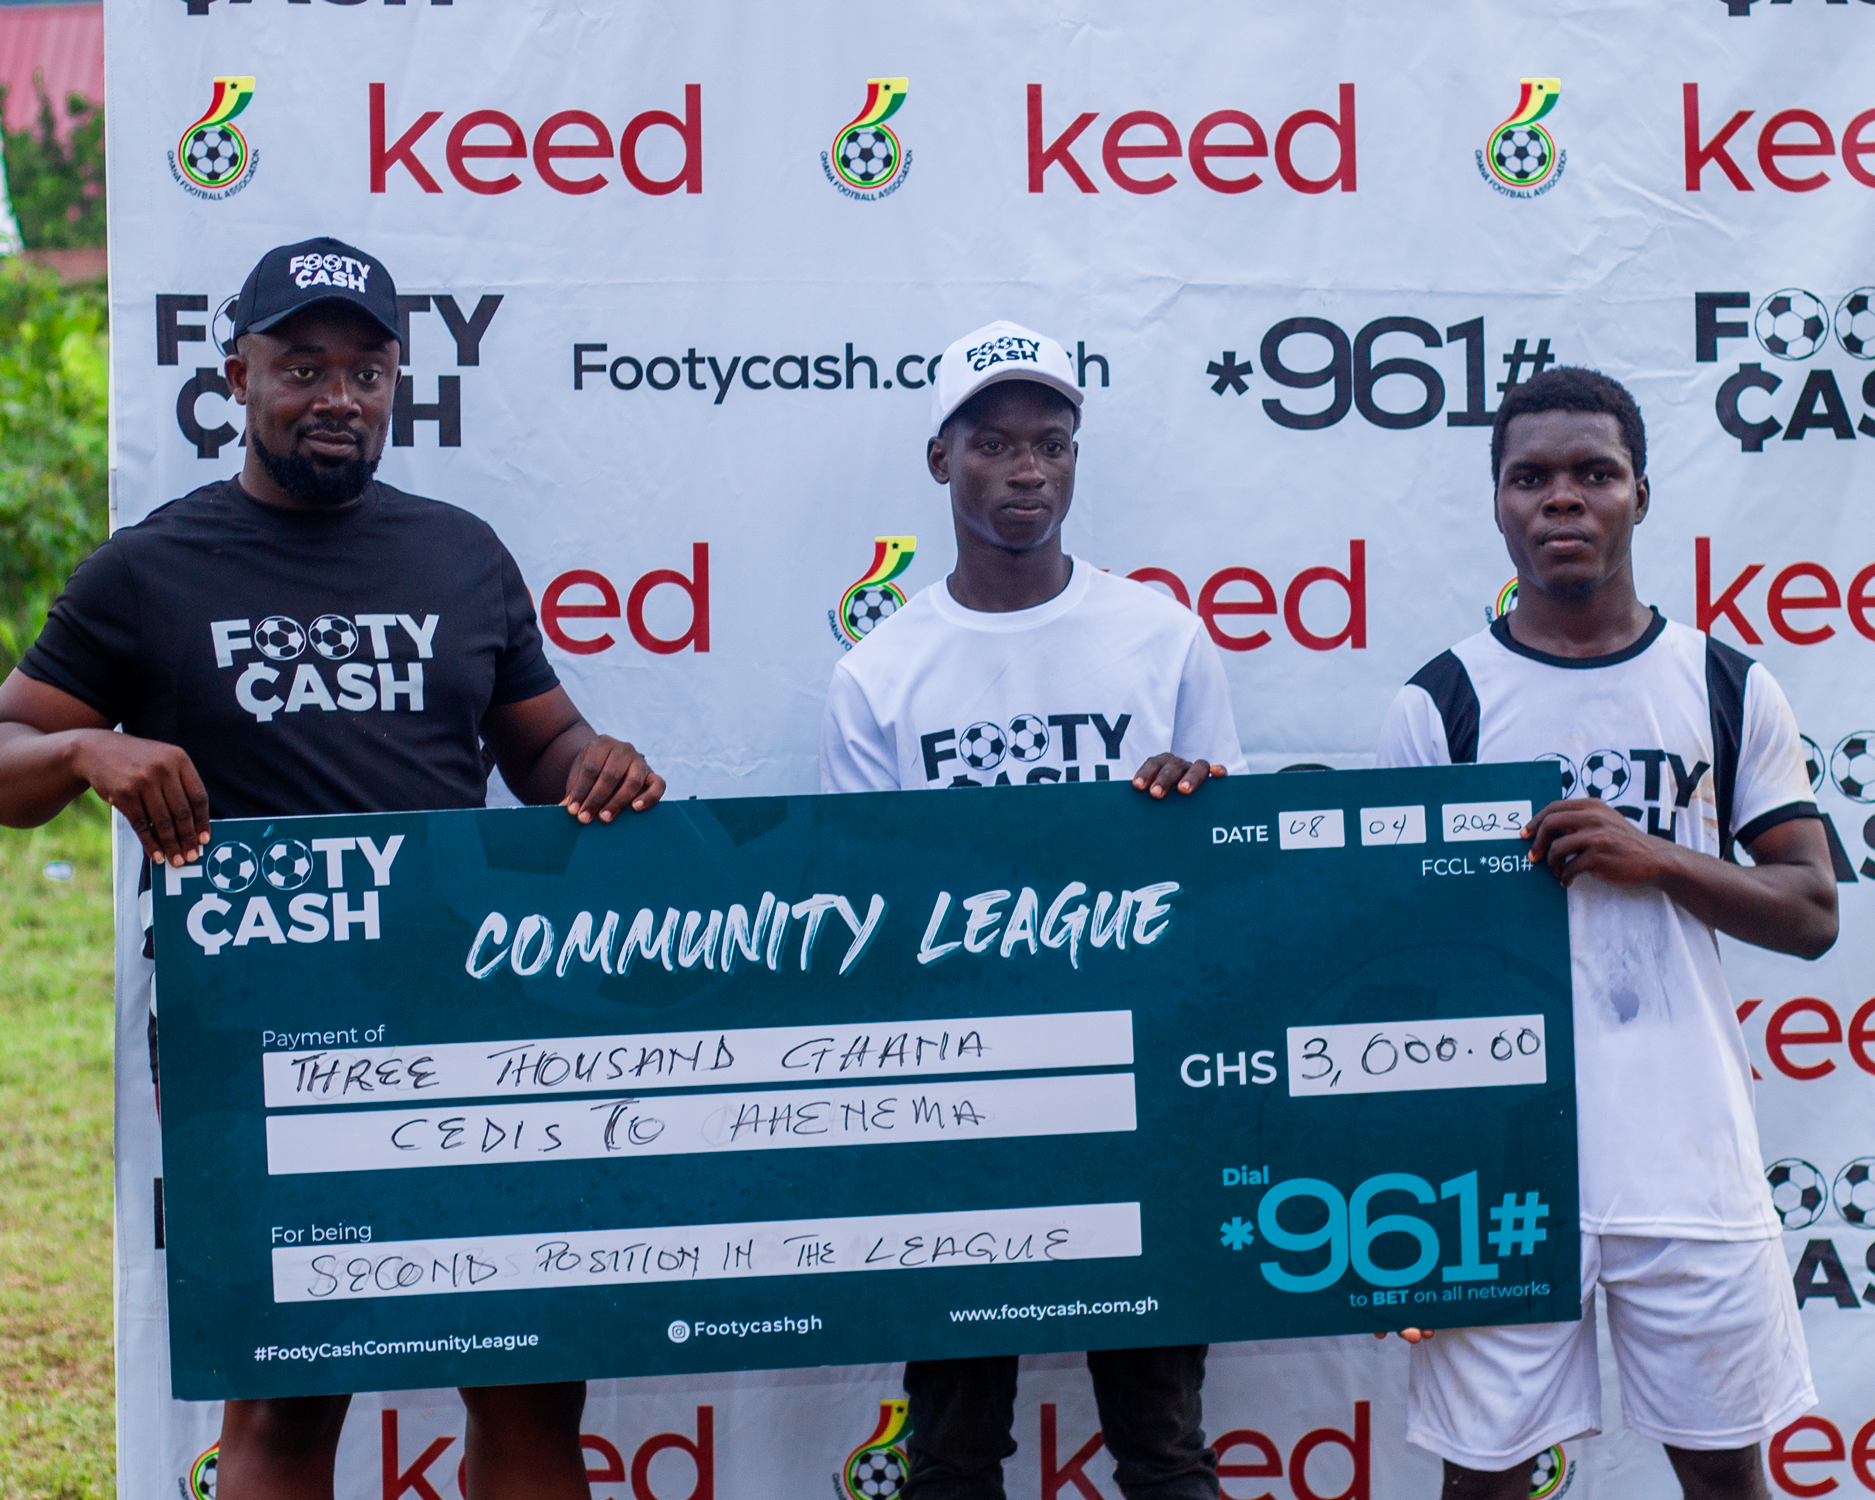 Footy Cash community league held